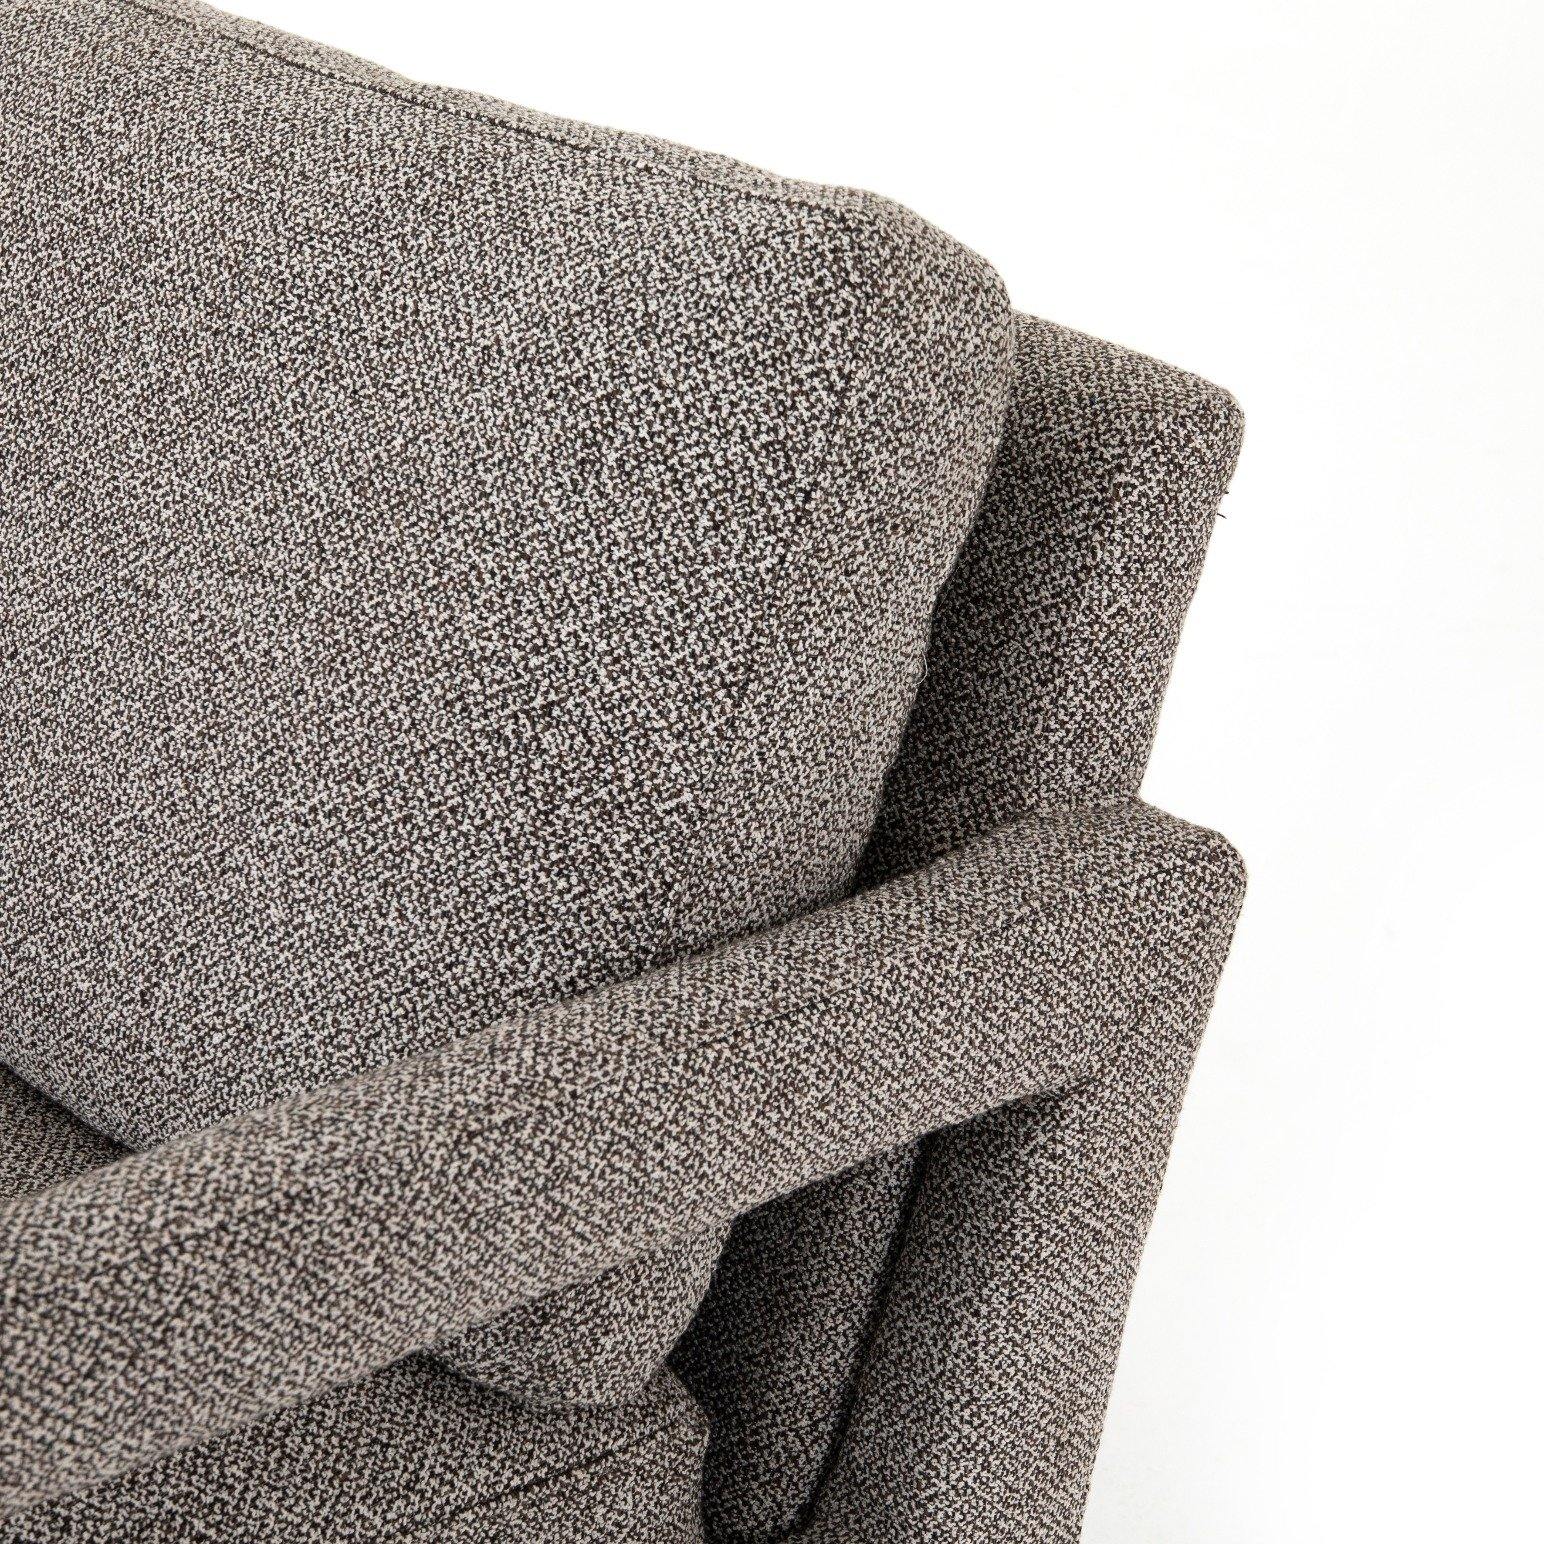 Olson Chair - Reimagine Designs - Accent Chair, Armchair, new